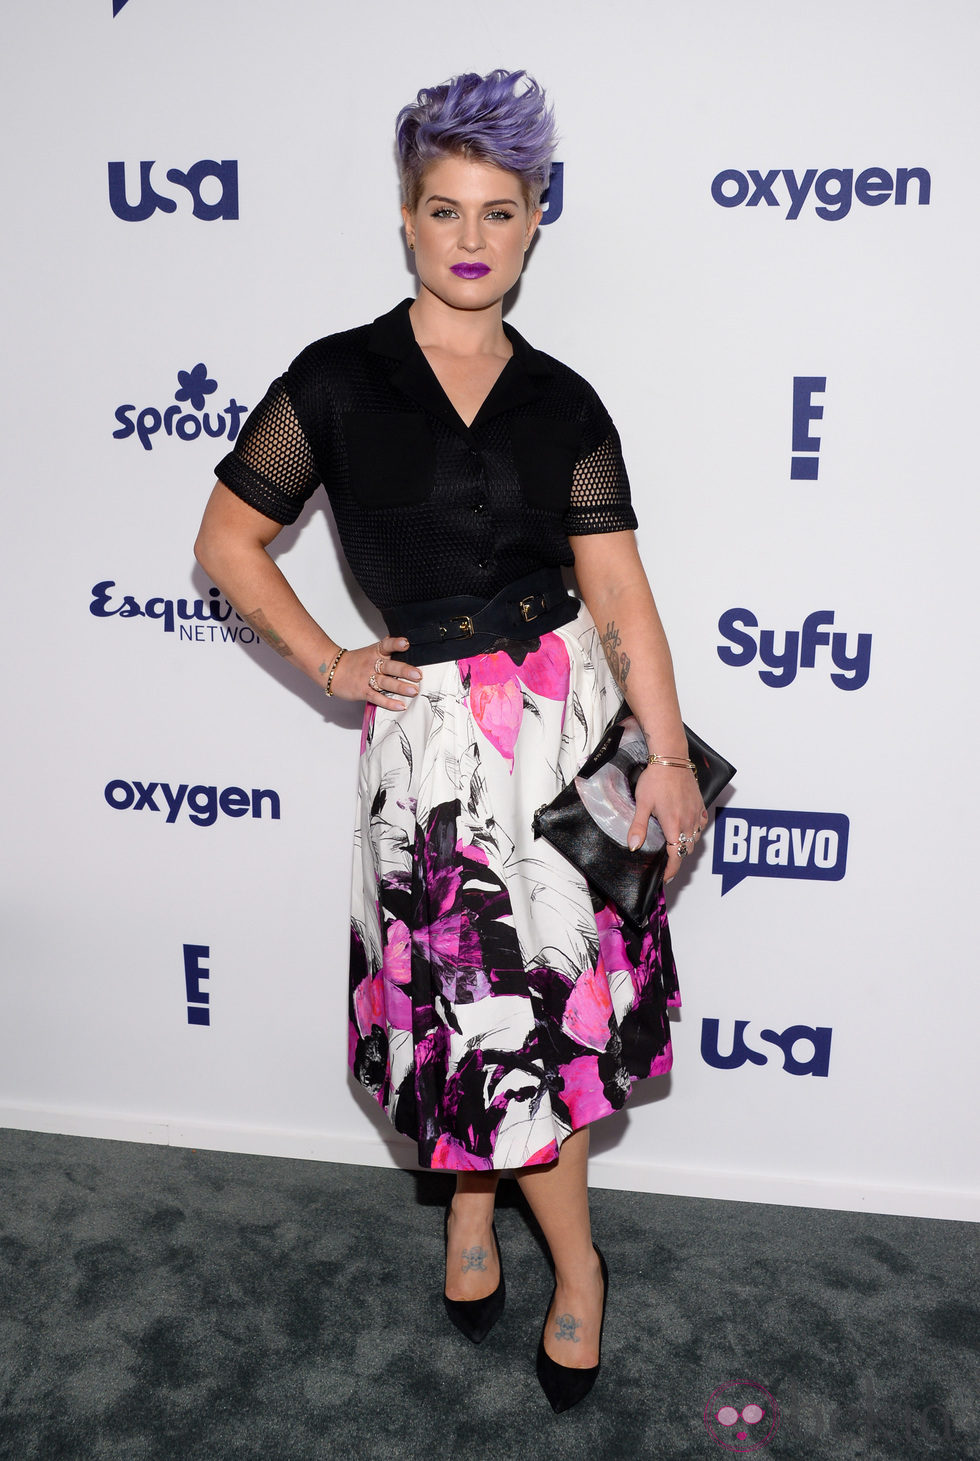 Kelly Osbourne en los Upfronts de la NBC Universal 2014